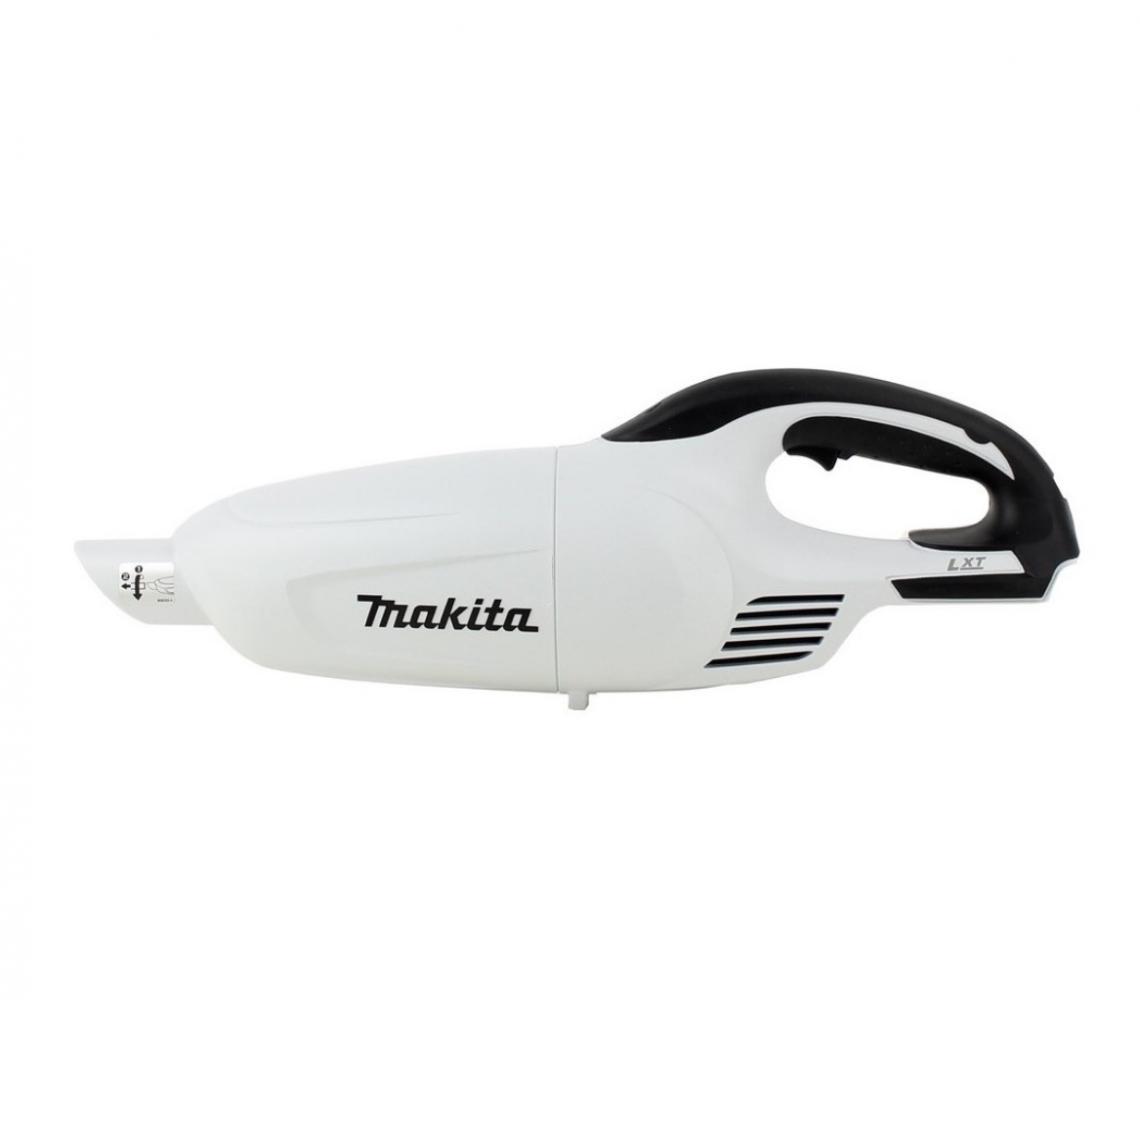 Makita - Makita DCL 180 G1 W 18 V Li-Ion Aspirateur sans fil blanc + 1 x Batterie 6,0 Ah - sans Chargeur - Aspirateur traîneau